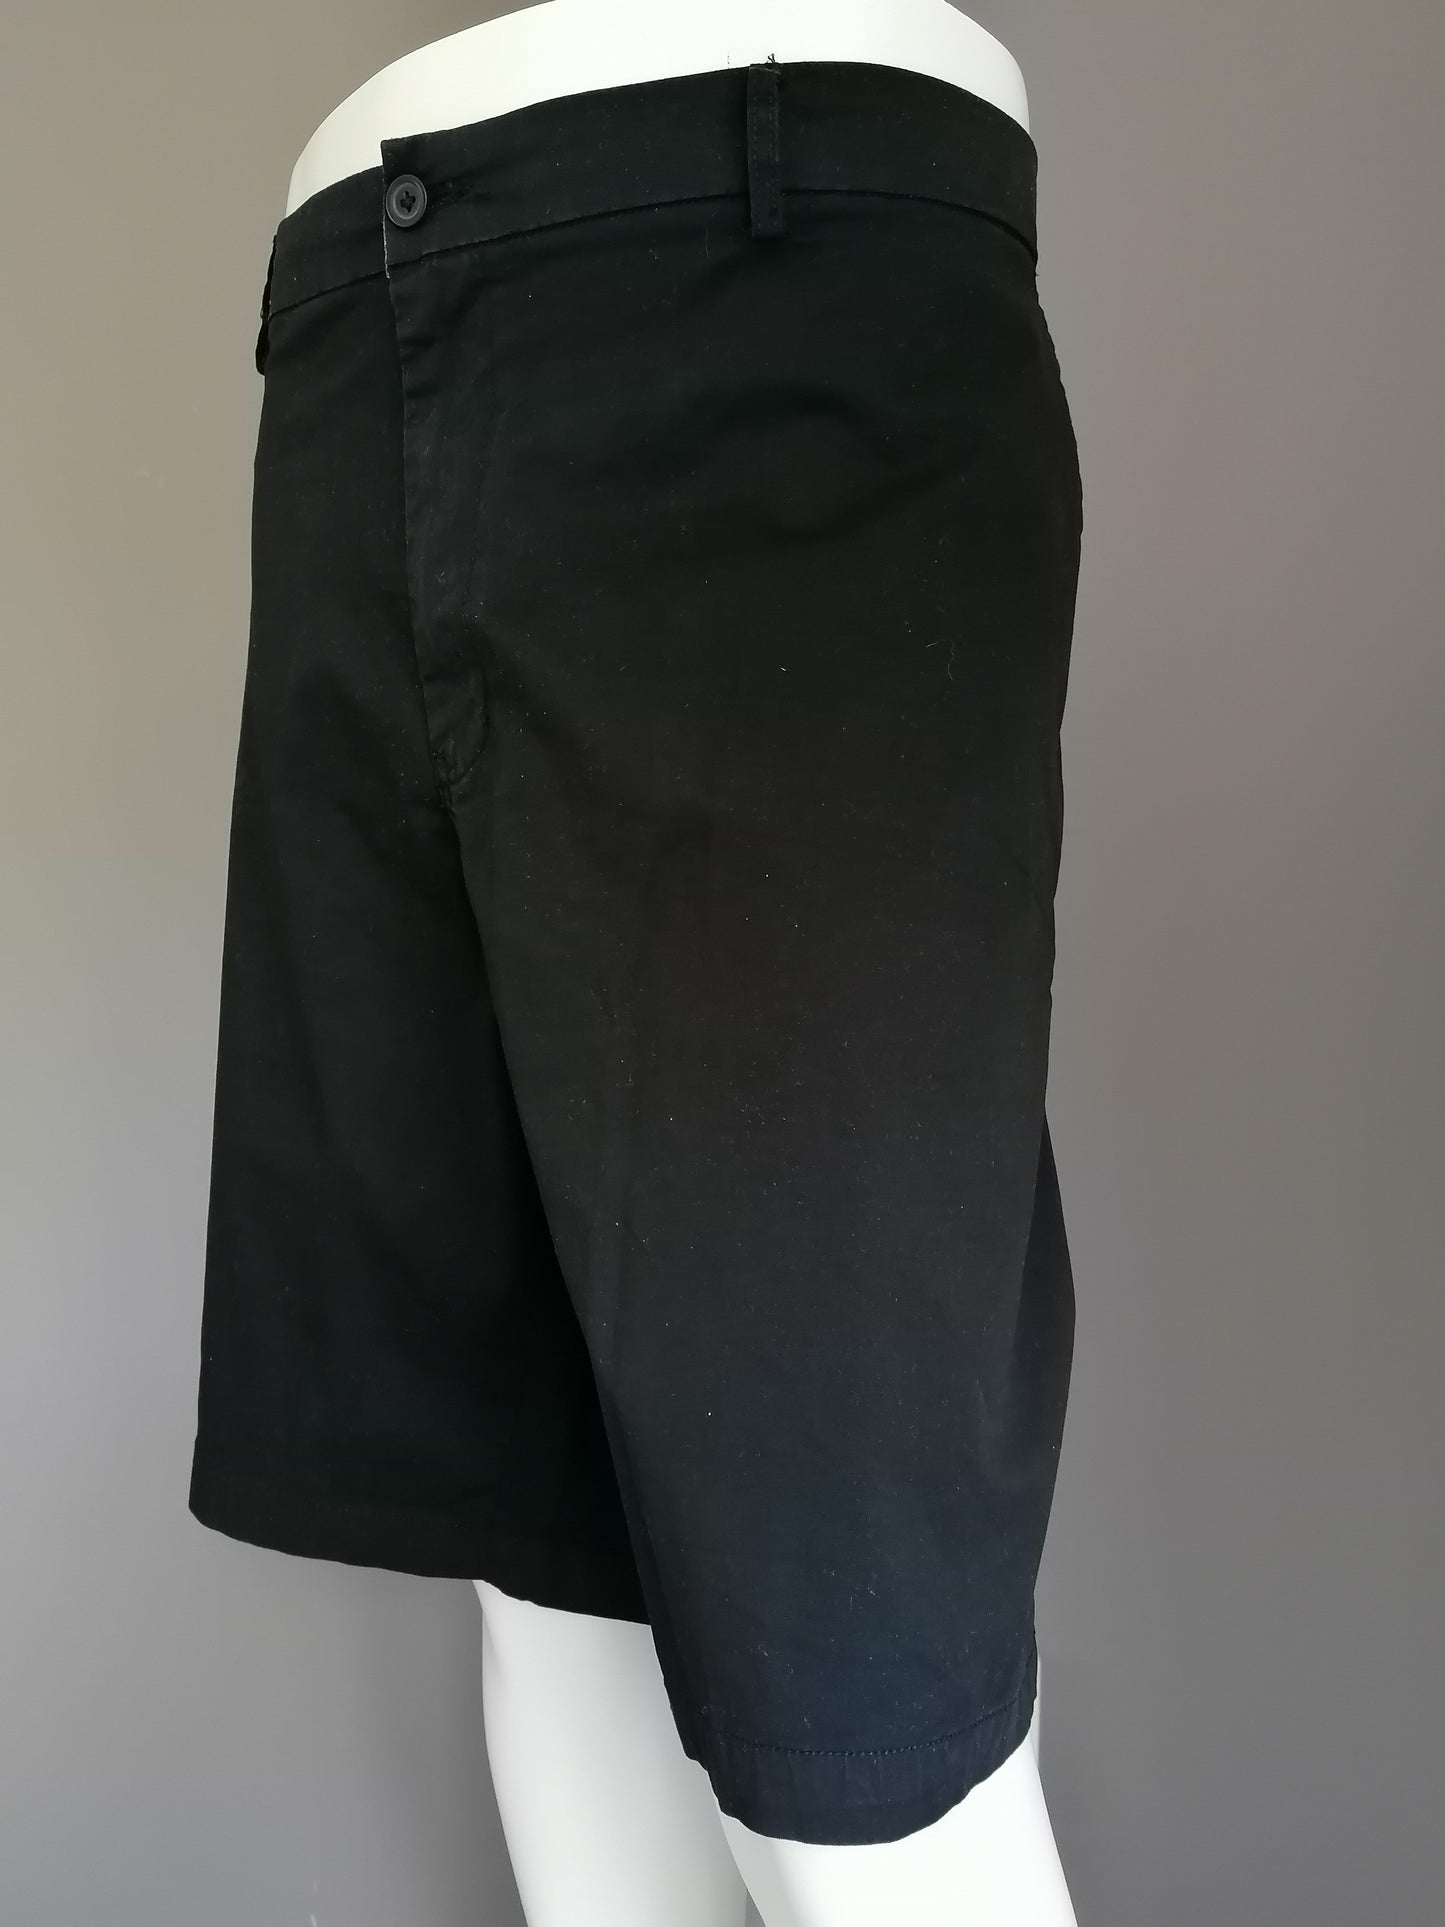 Capsule Men korte broek. Zwart gekleurd. Maat W54. Stretch